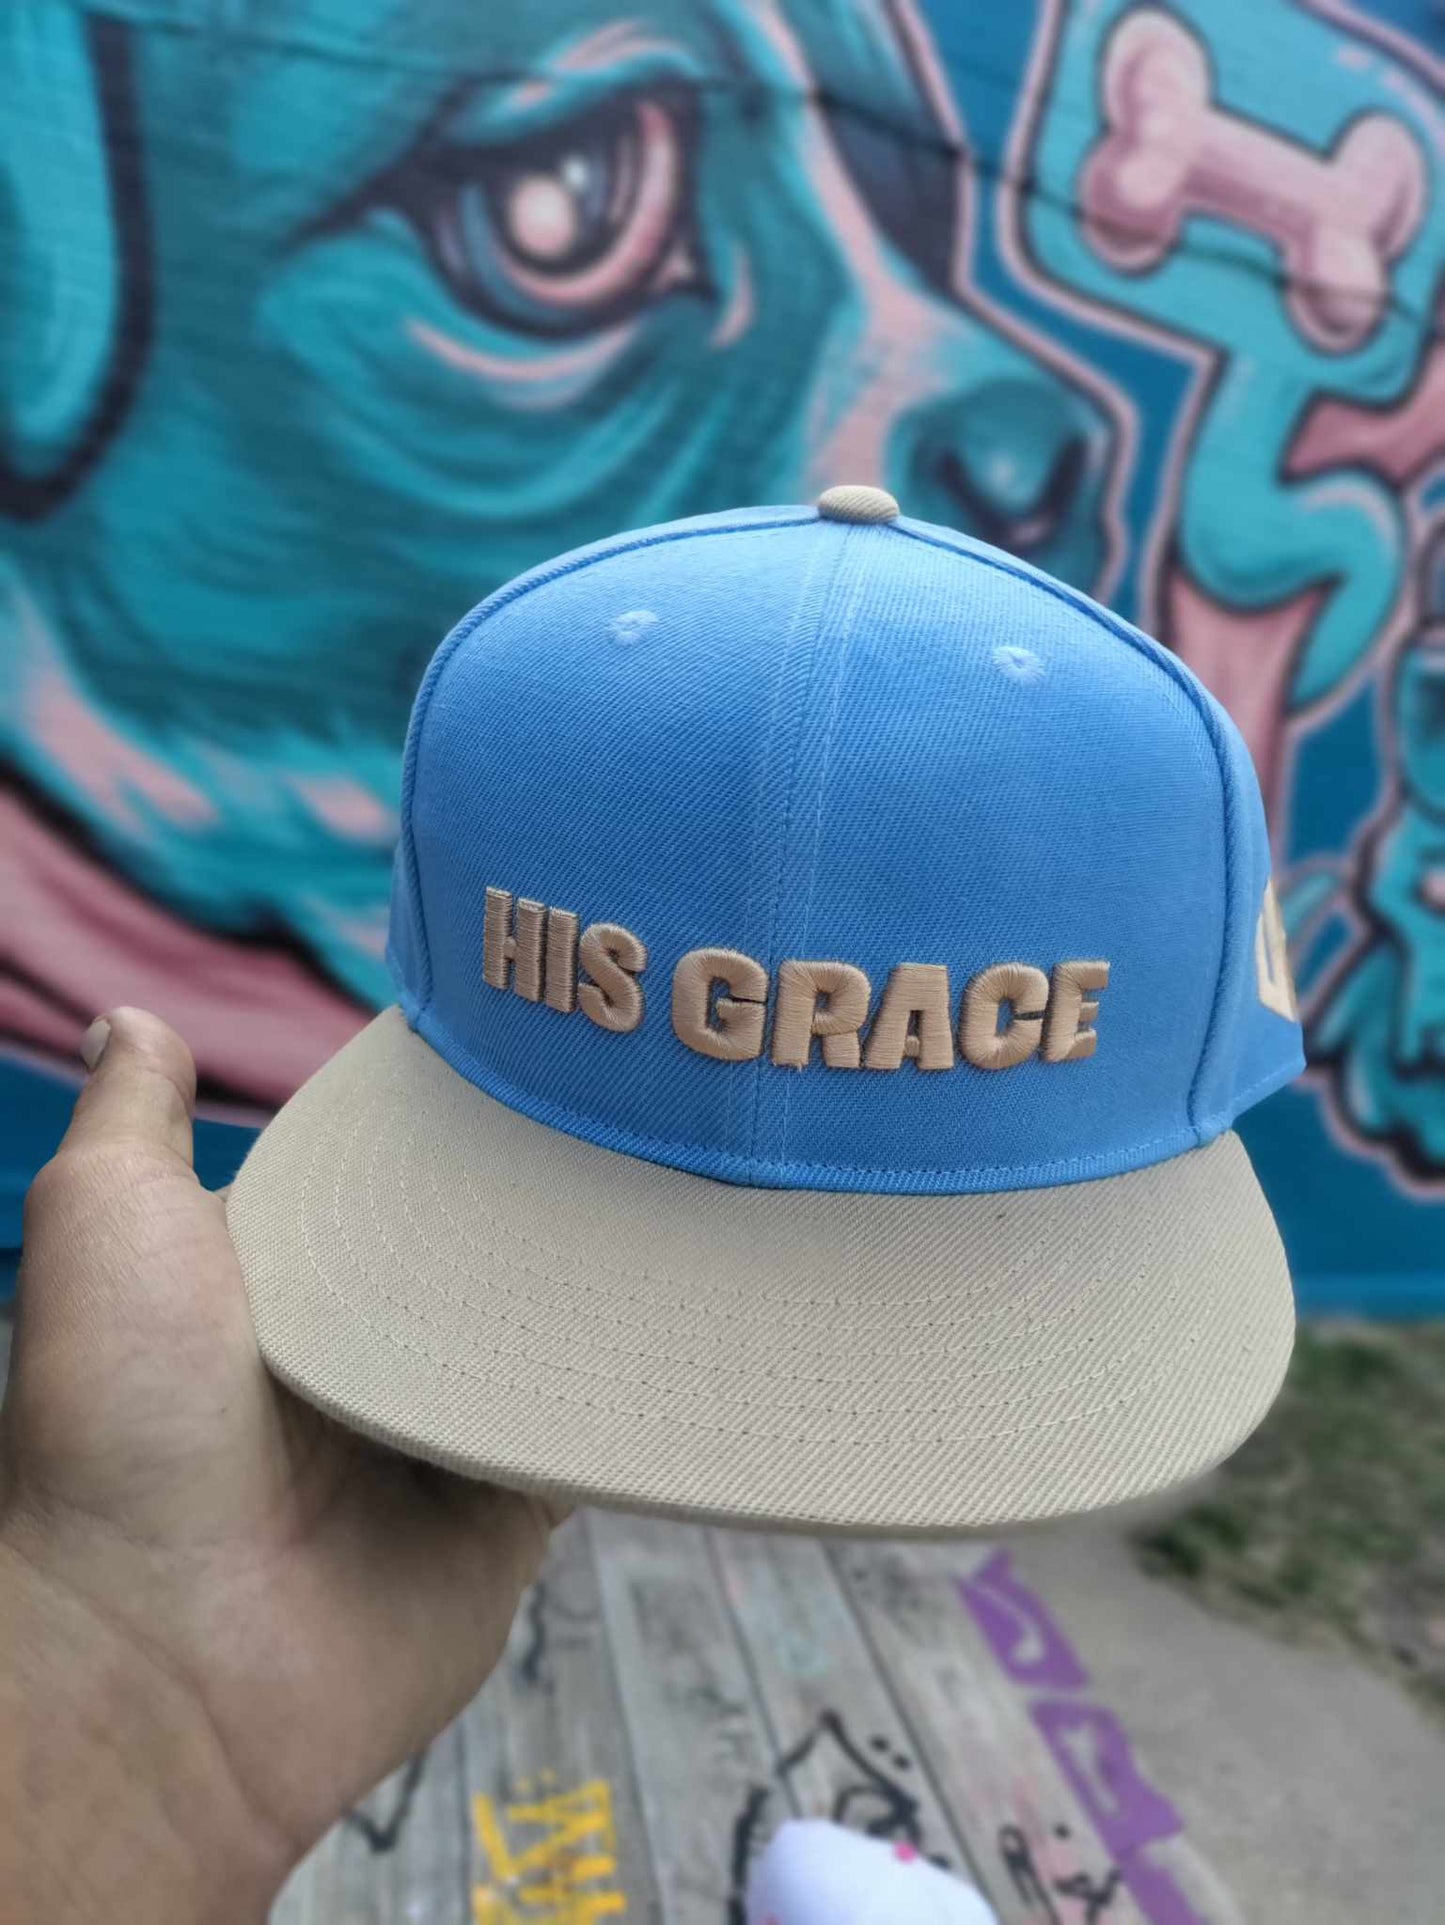 His Grace - Slate and Brown Snapback